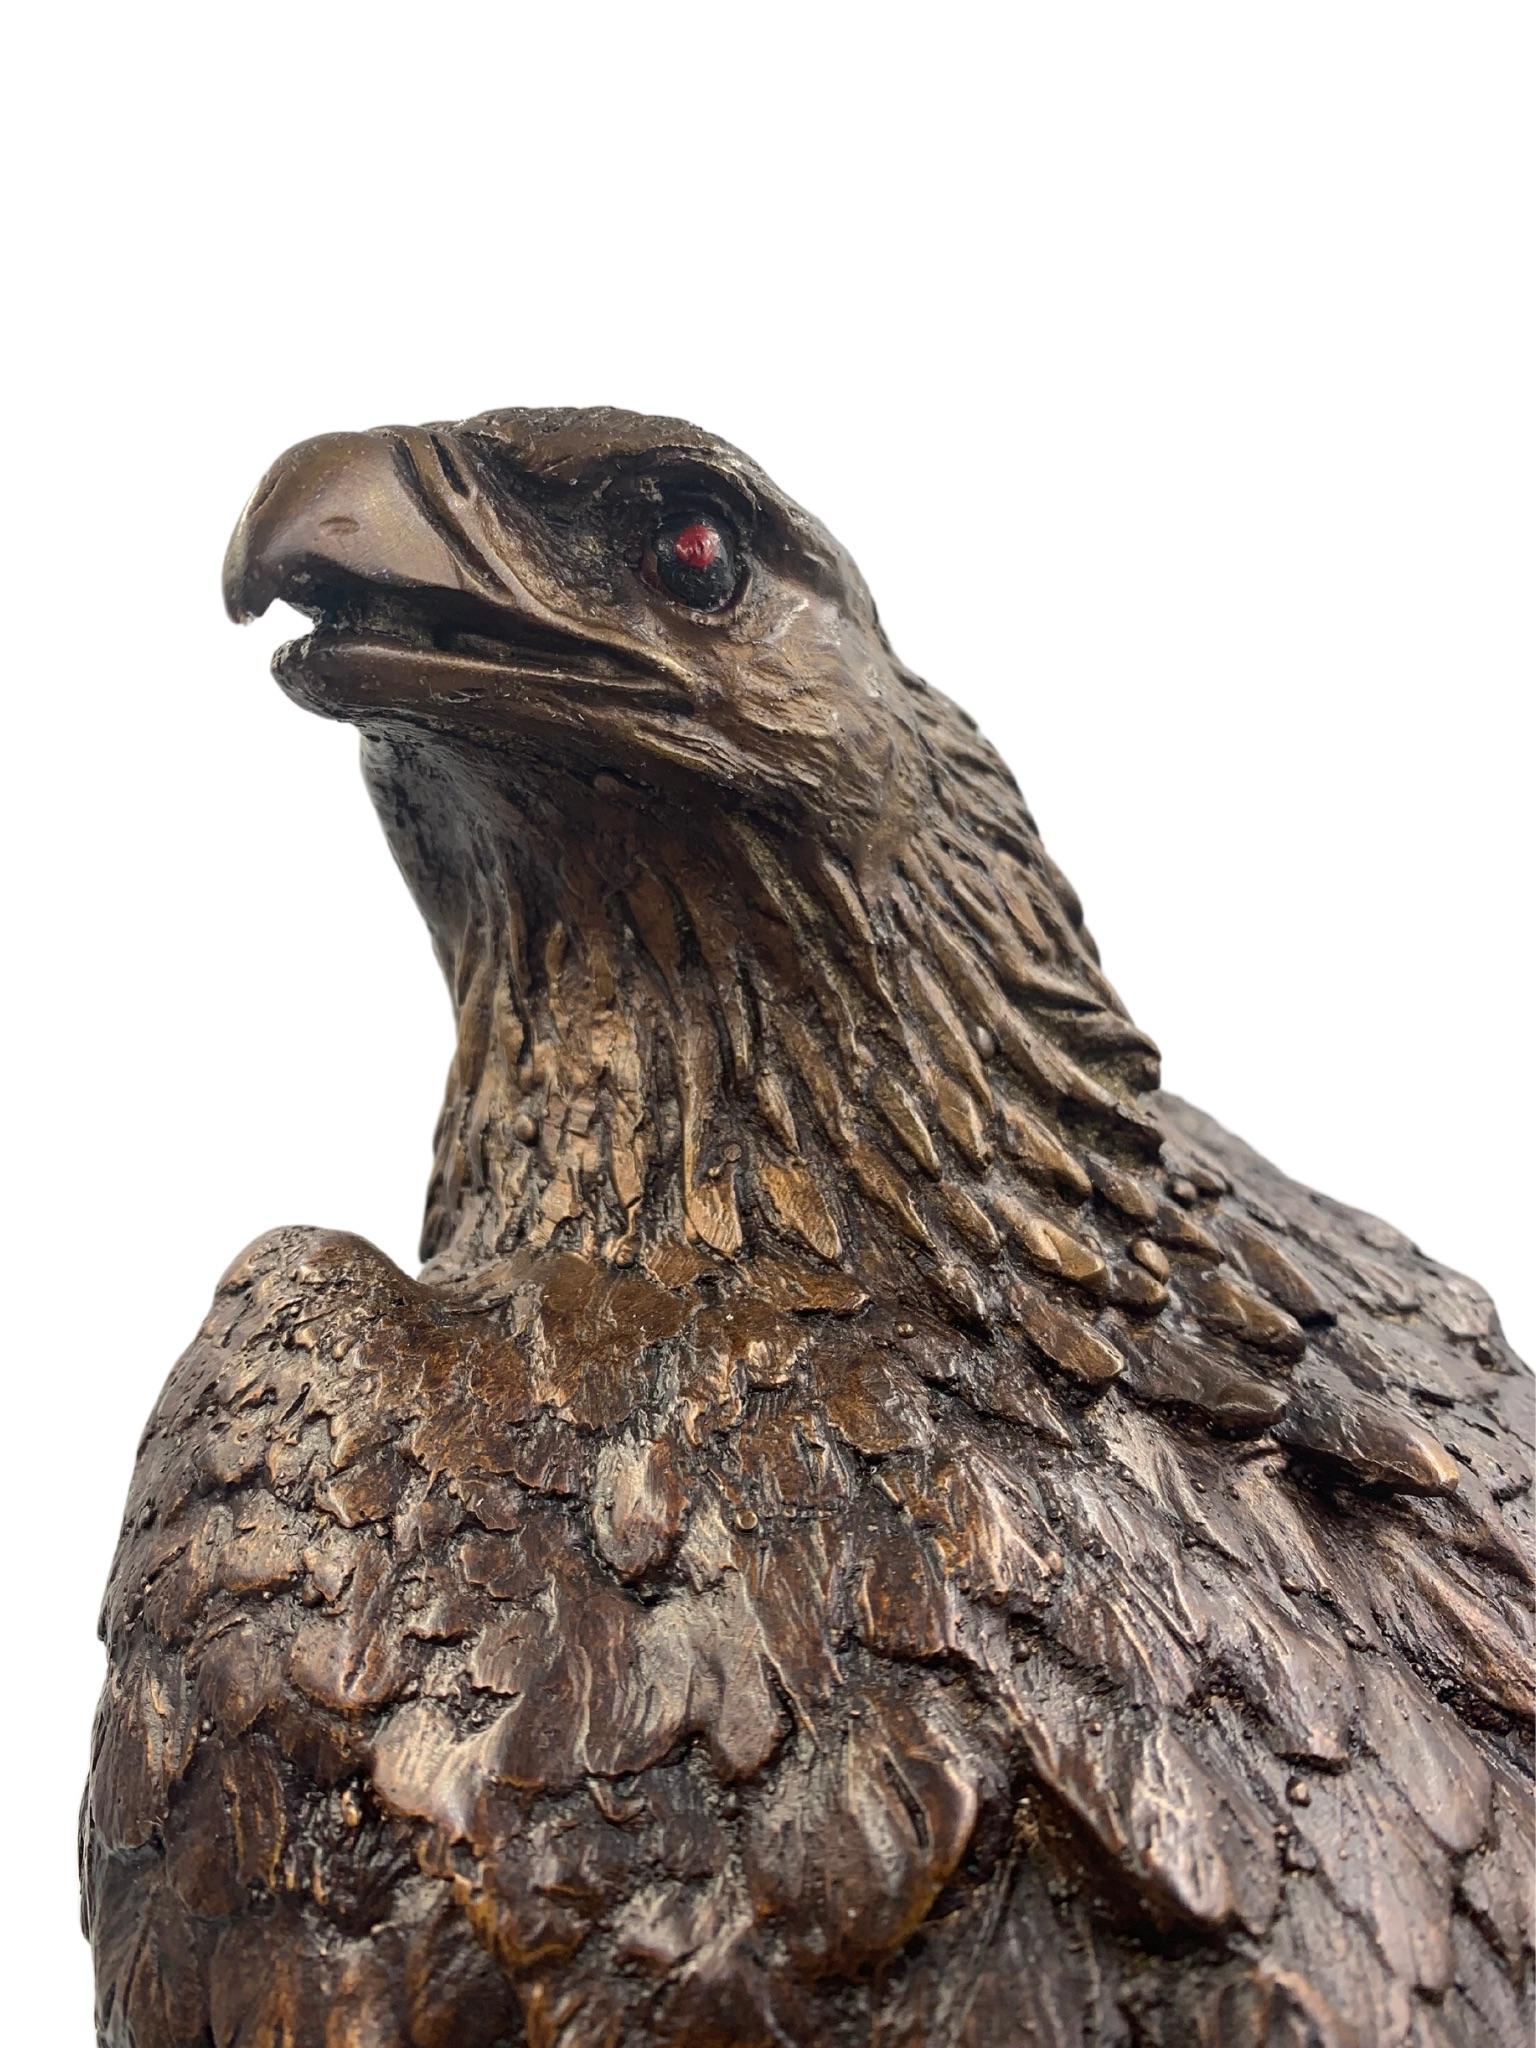 jules moigniez bronze eagle